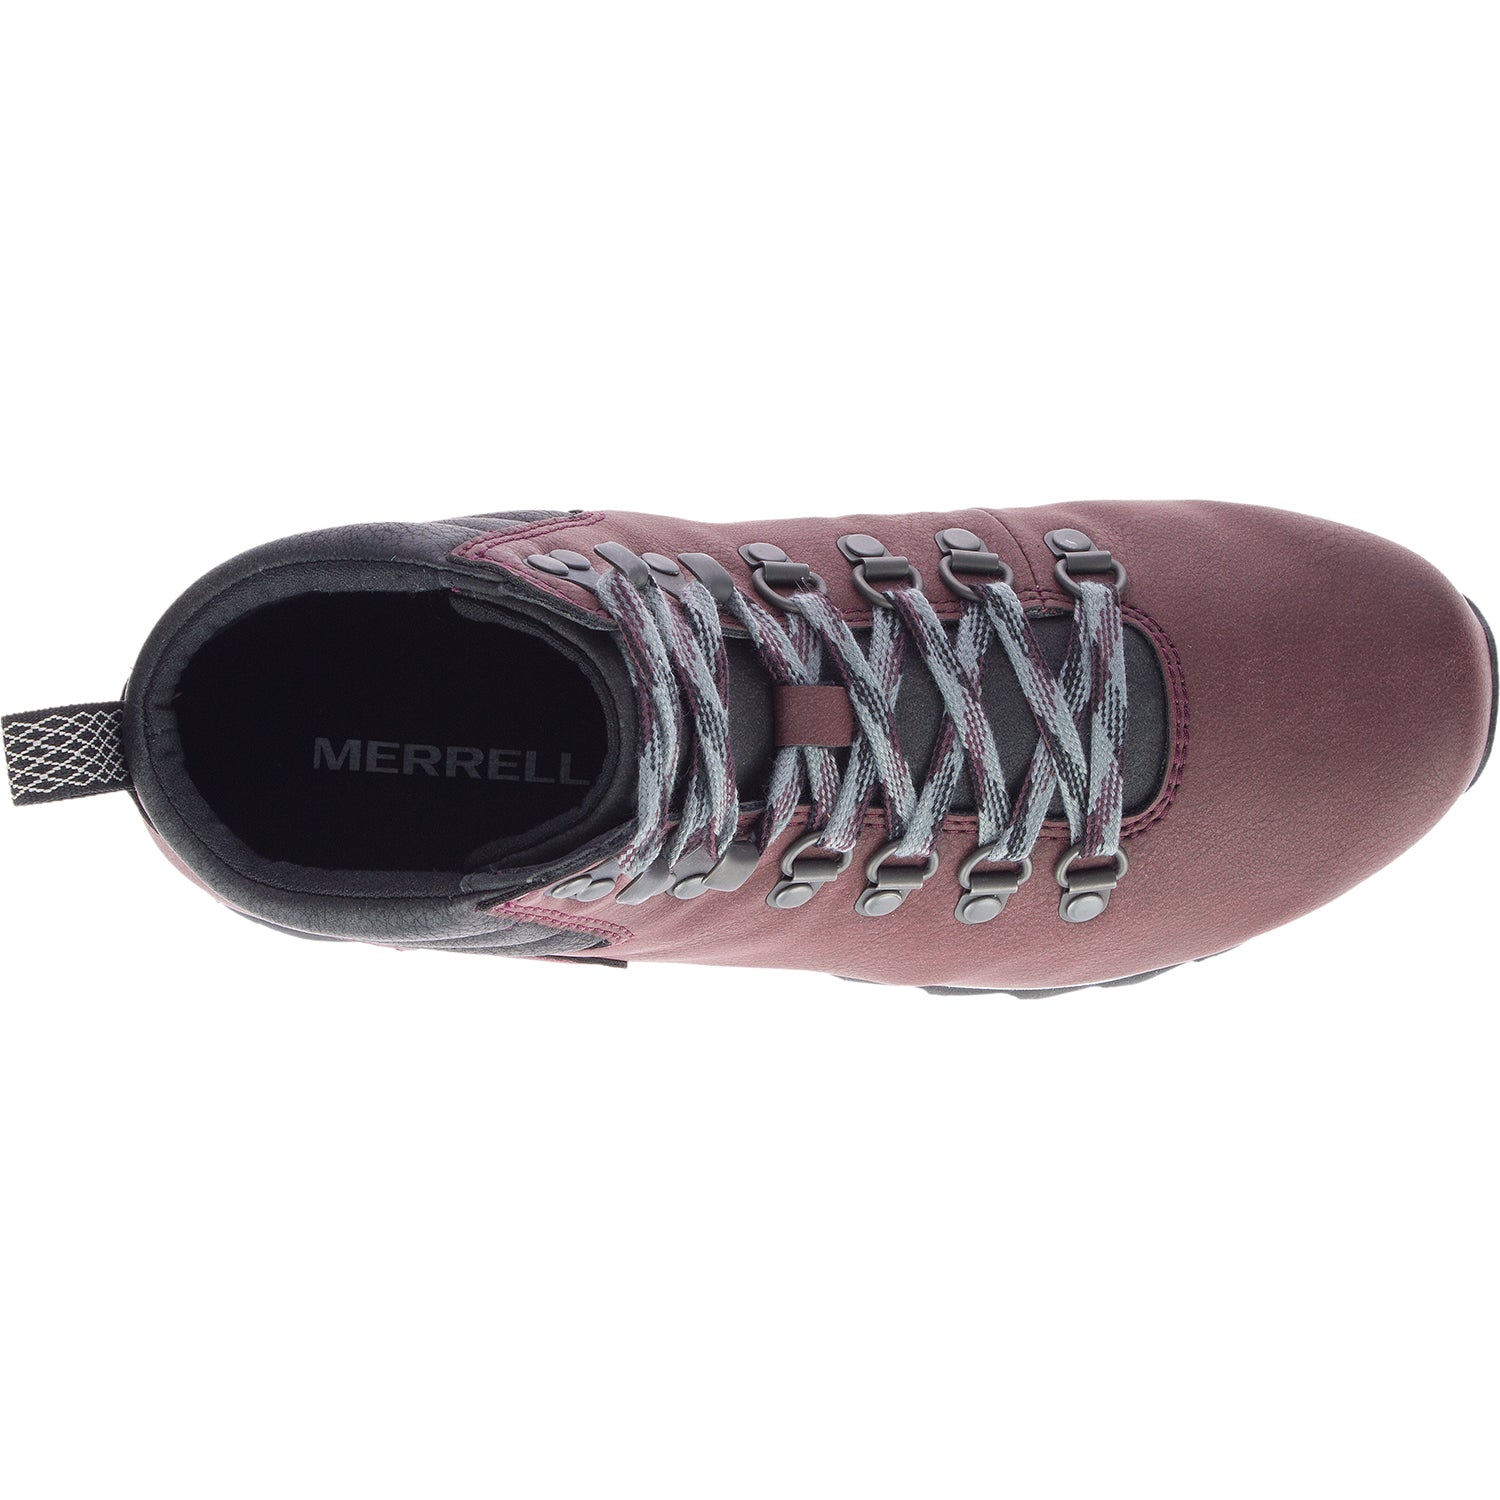 Merrell Alpine Hiker | Women's Vegan Hiking Boots | Footwear etc.